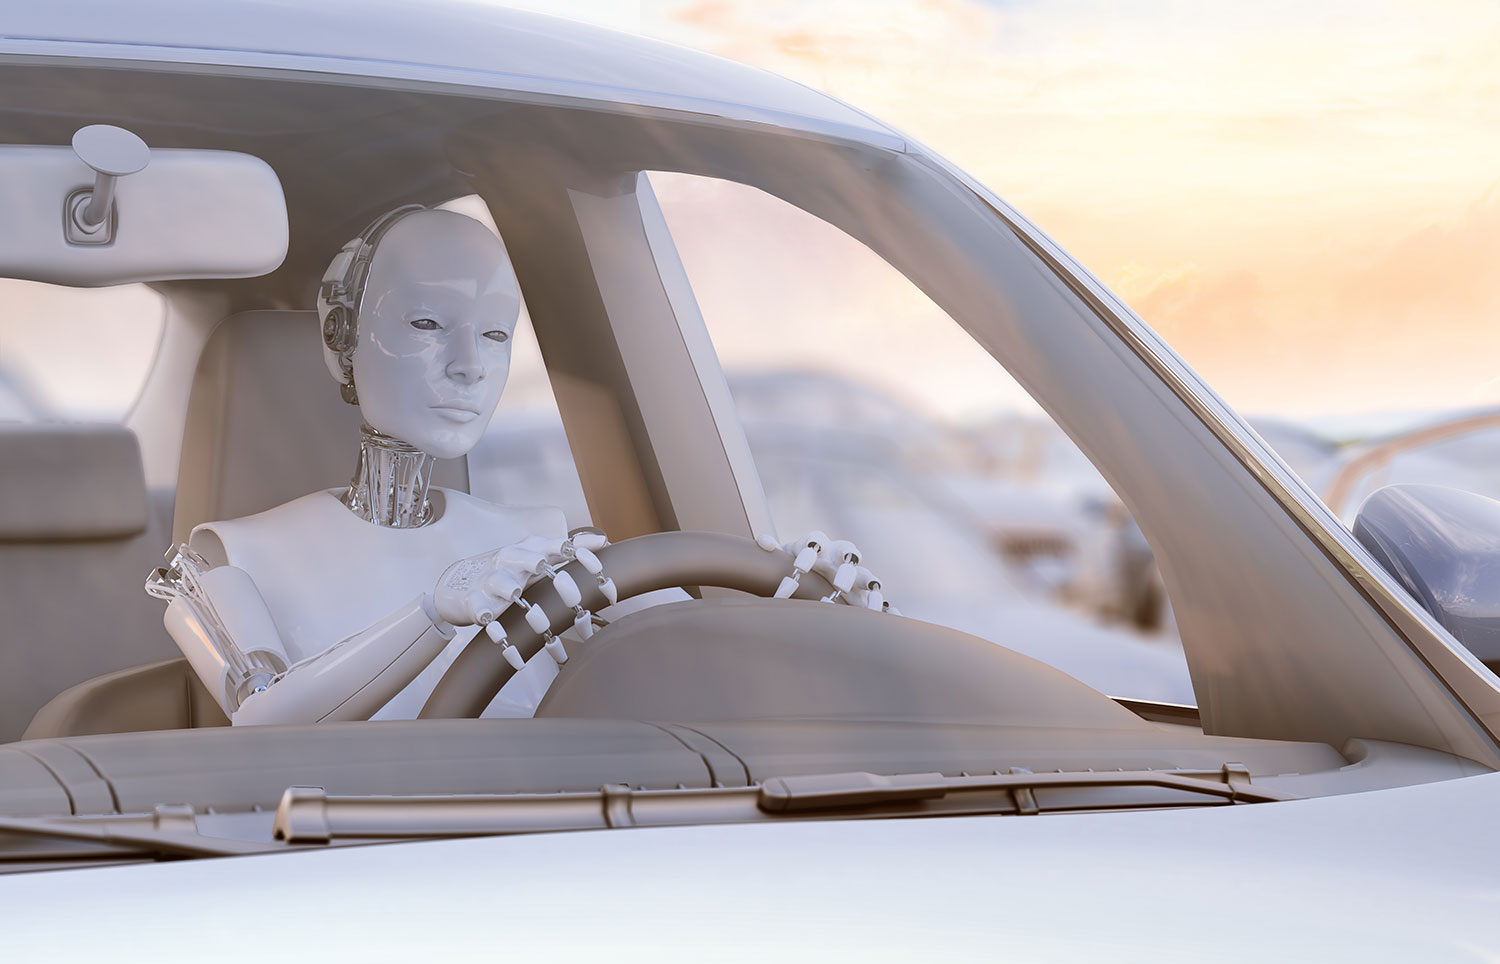 Robots Take the Wheel - Self-Driving Cars & Big Data